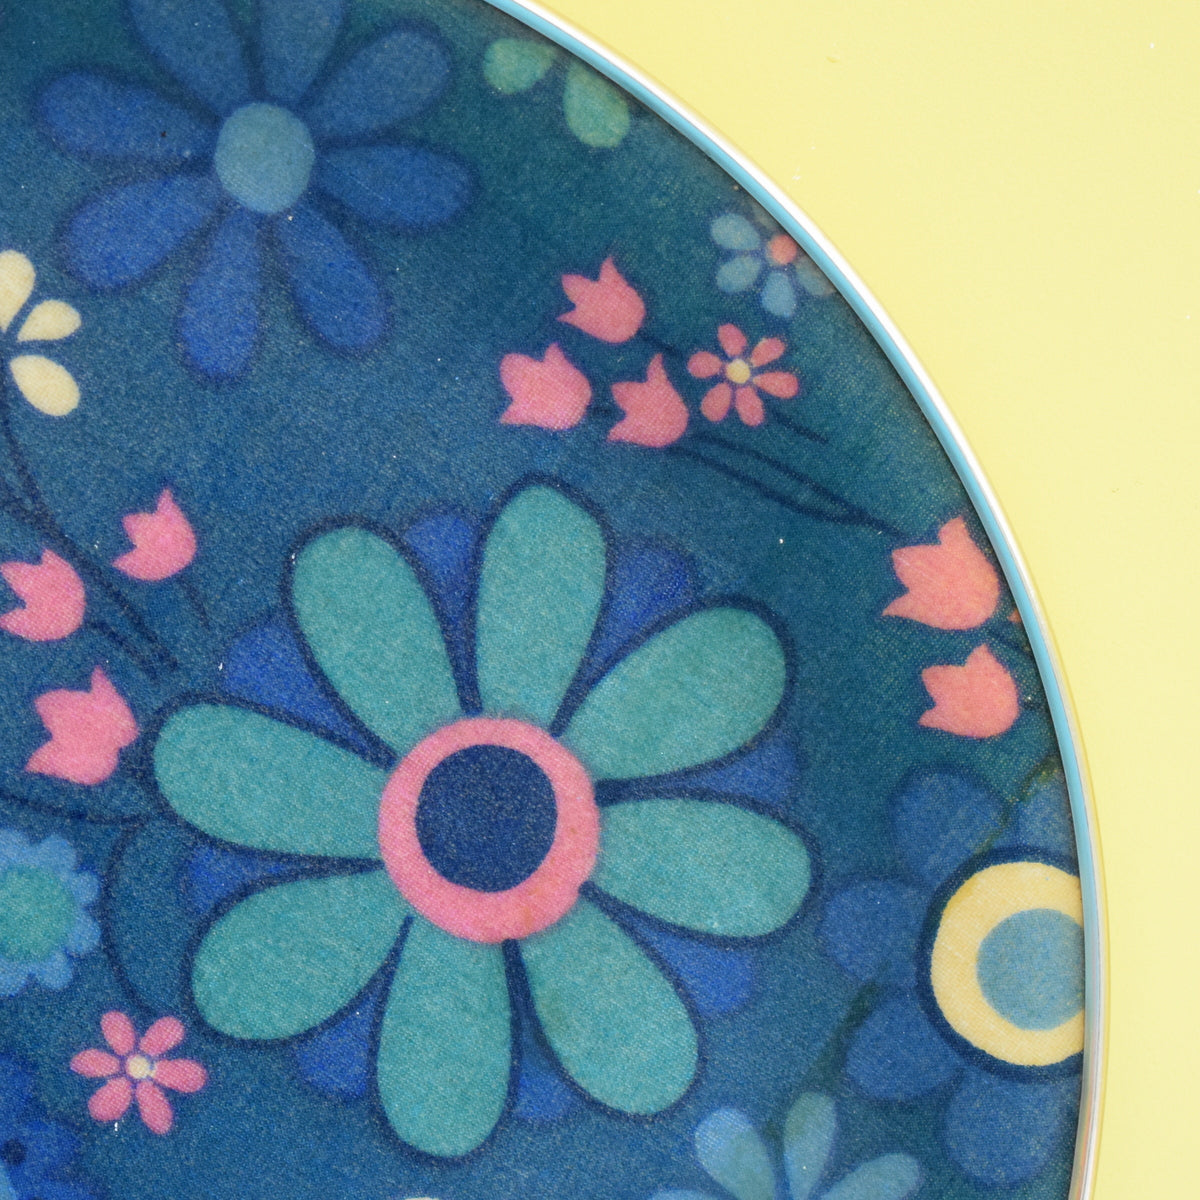 Vintage 1960s fibreglass Round Tray - Flower Power Design - Blue